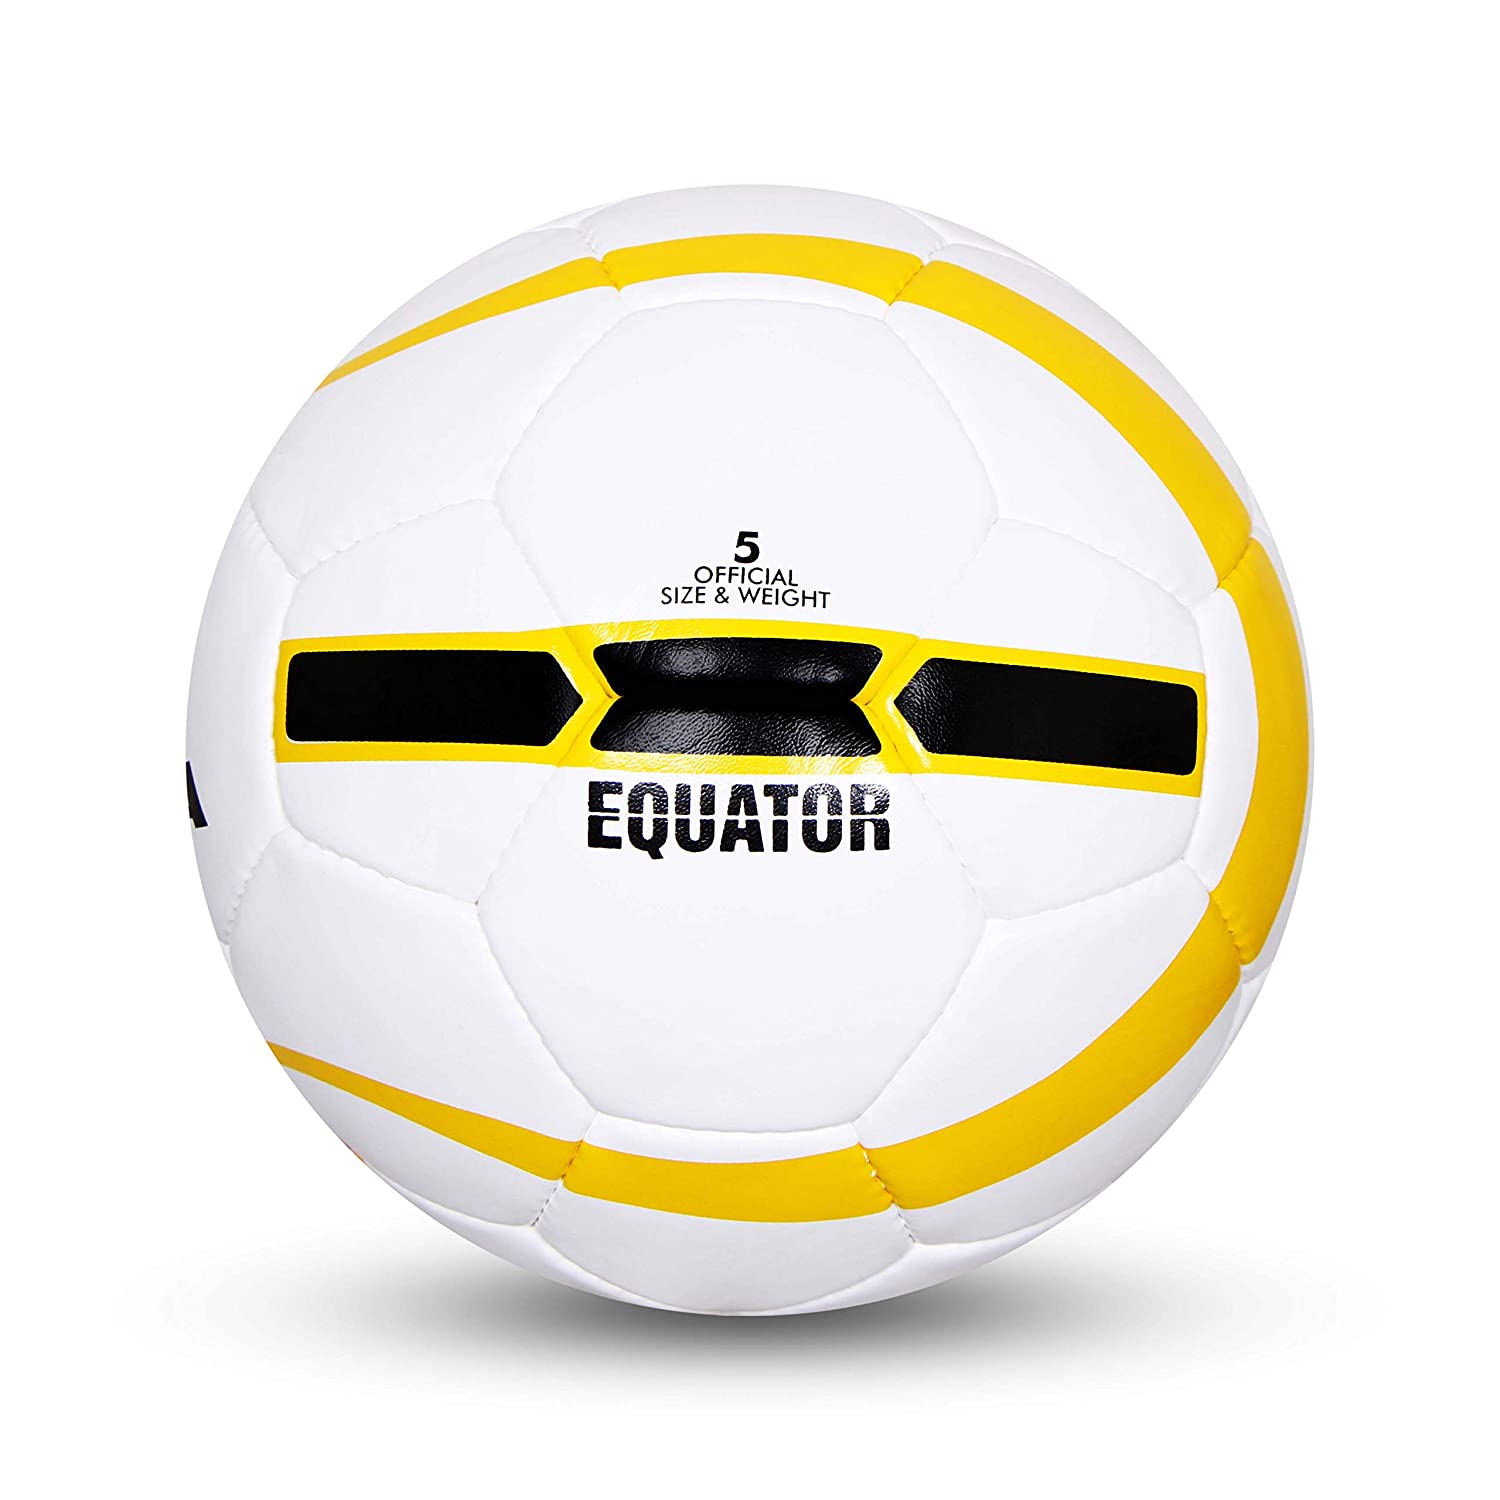 Nivia Equator Football, White/Black - Size 5 - Best Price online Prokicksports.com